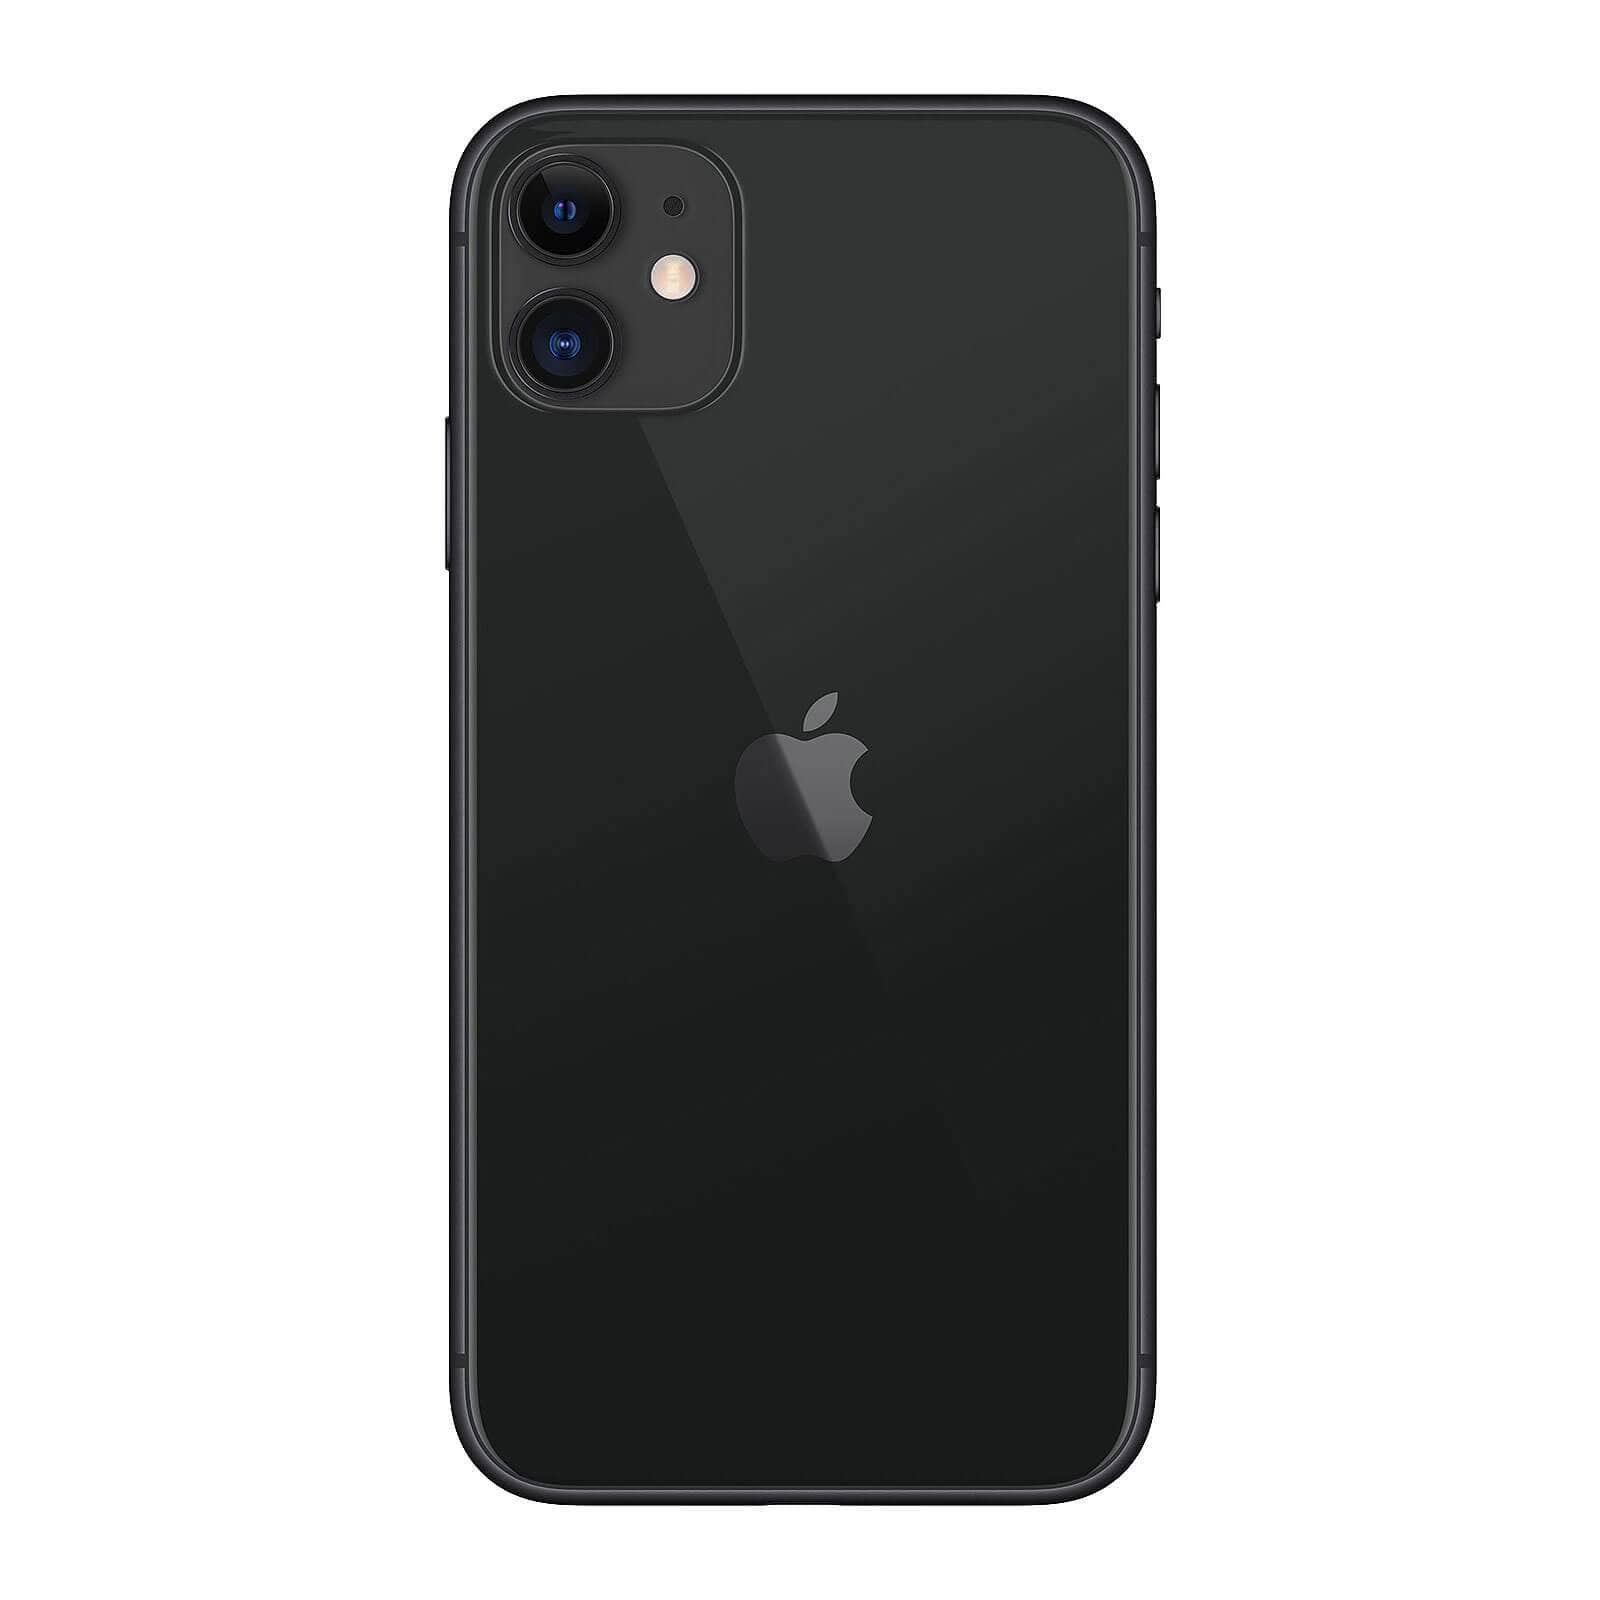 Apple iPhone 11 256GB Black Very Good - Unlocked